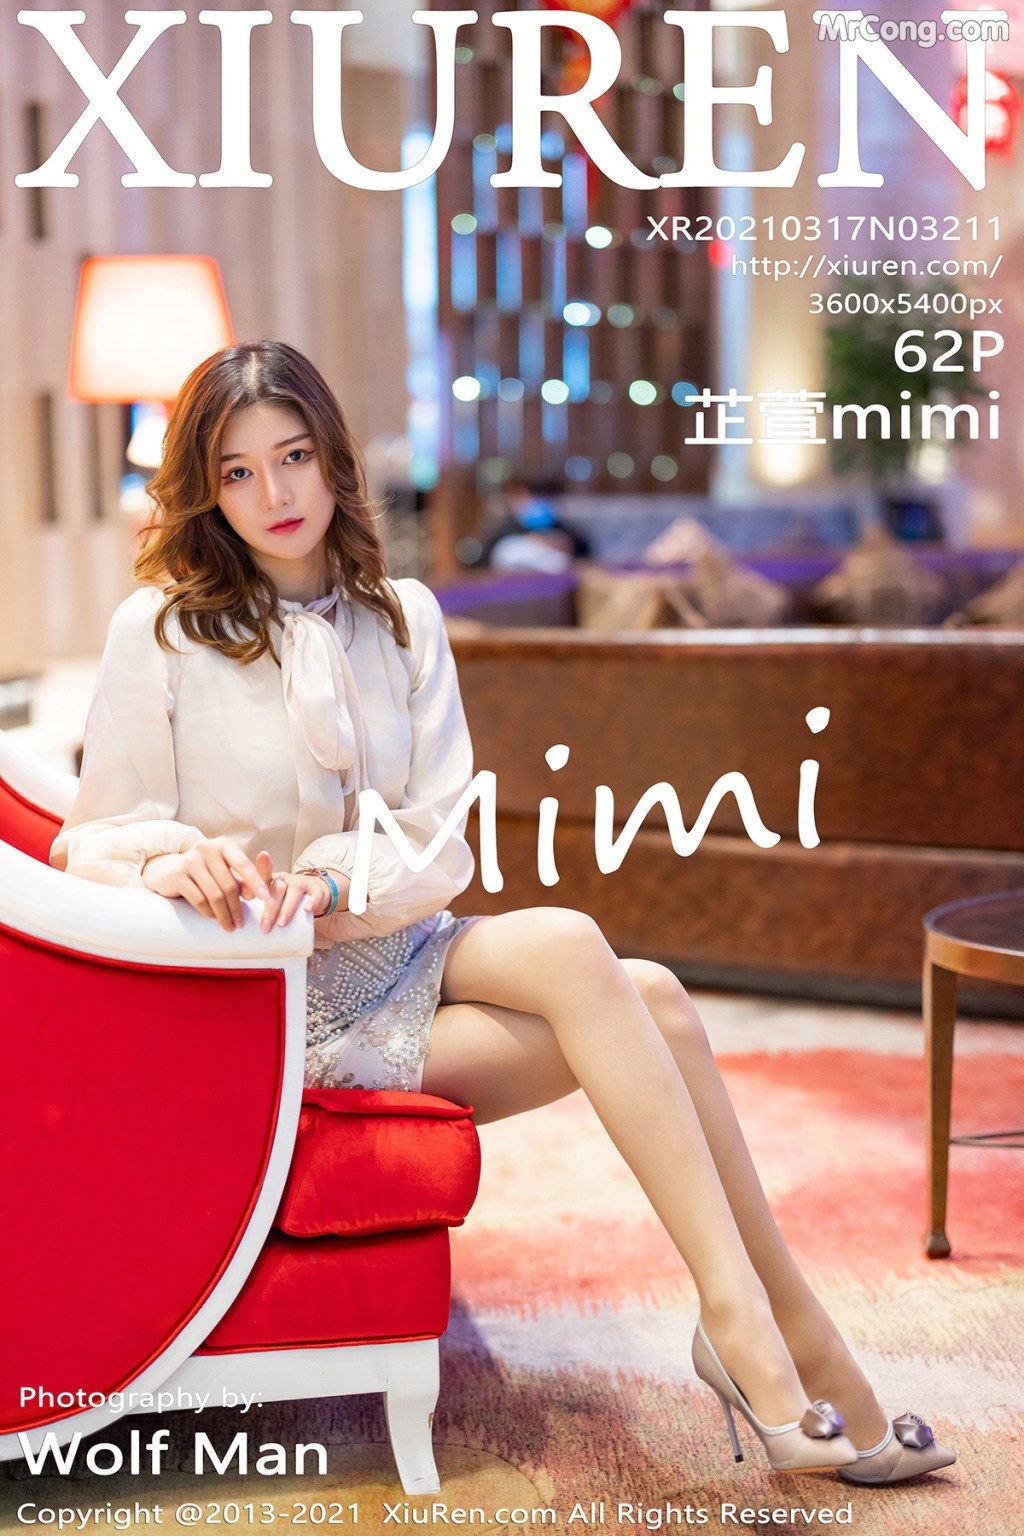 [XIUREN] No.3211 芷萱mimi Cover Photo